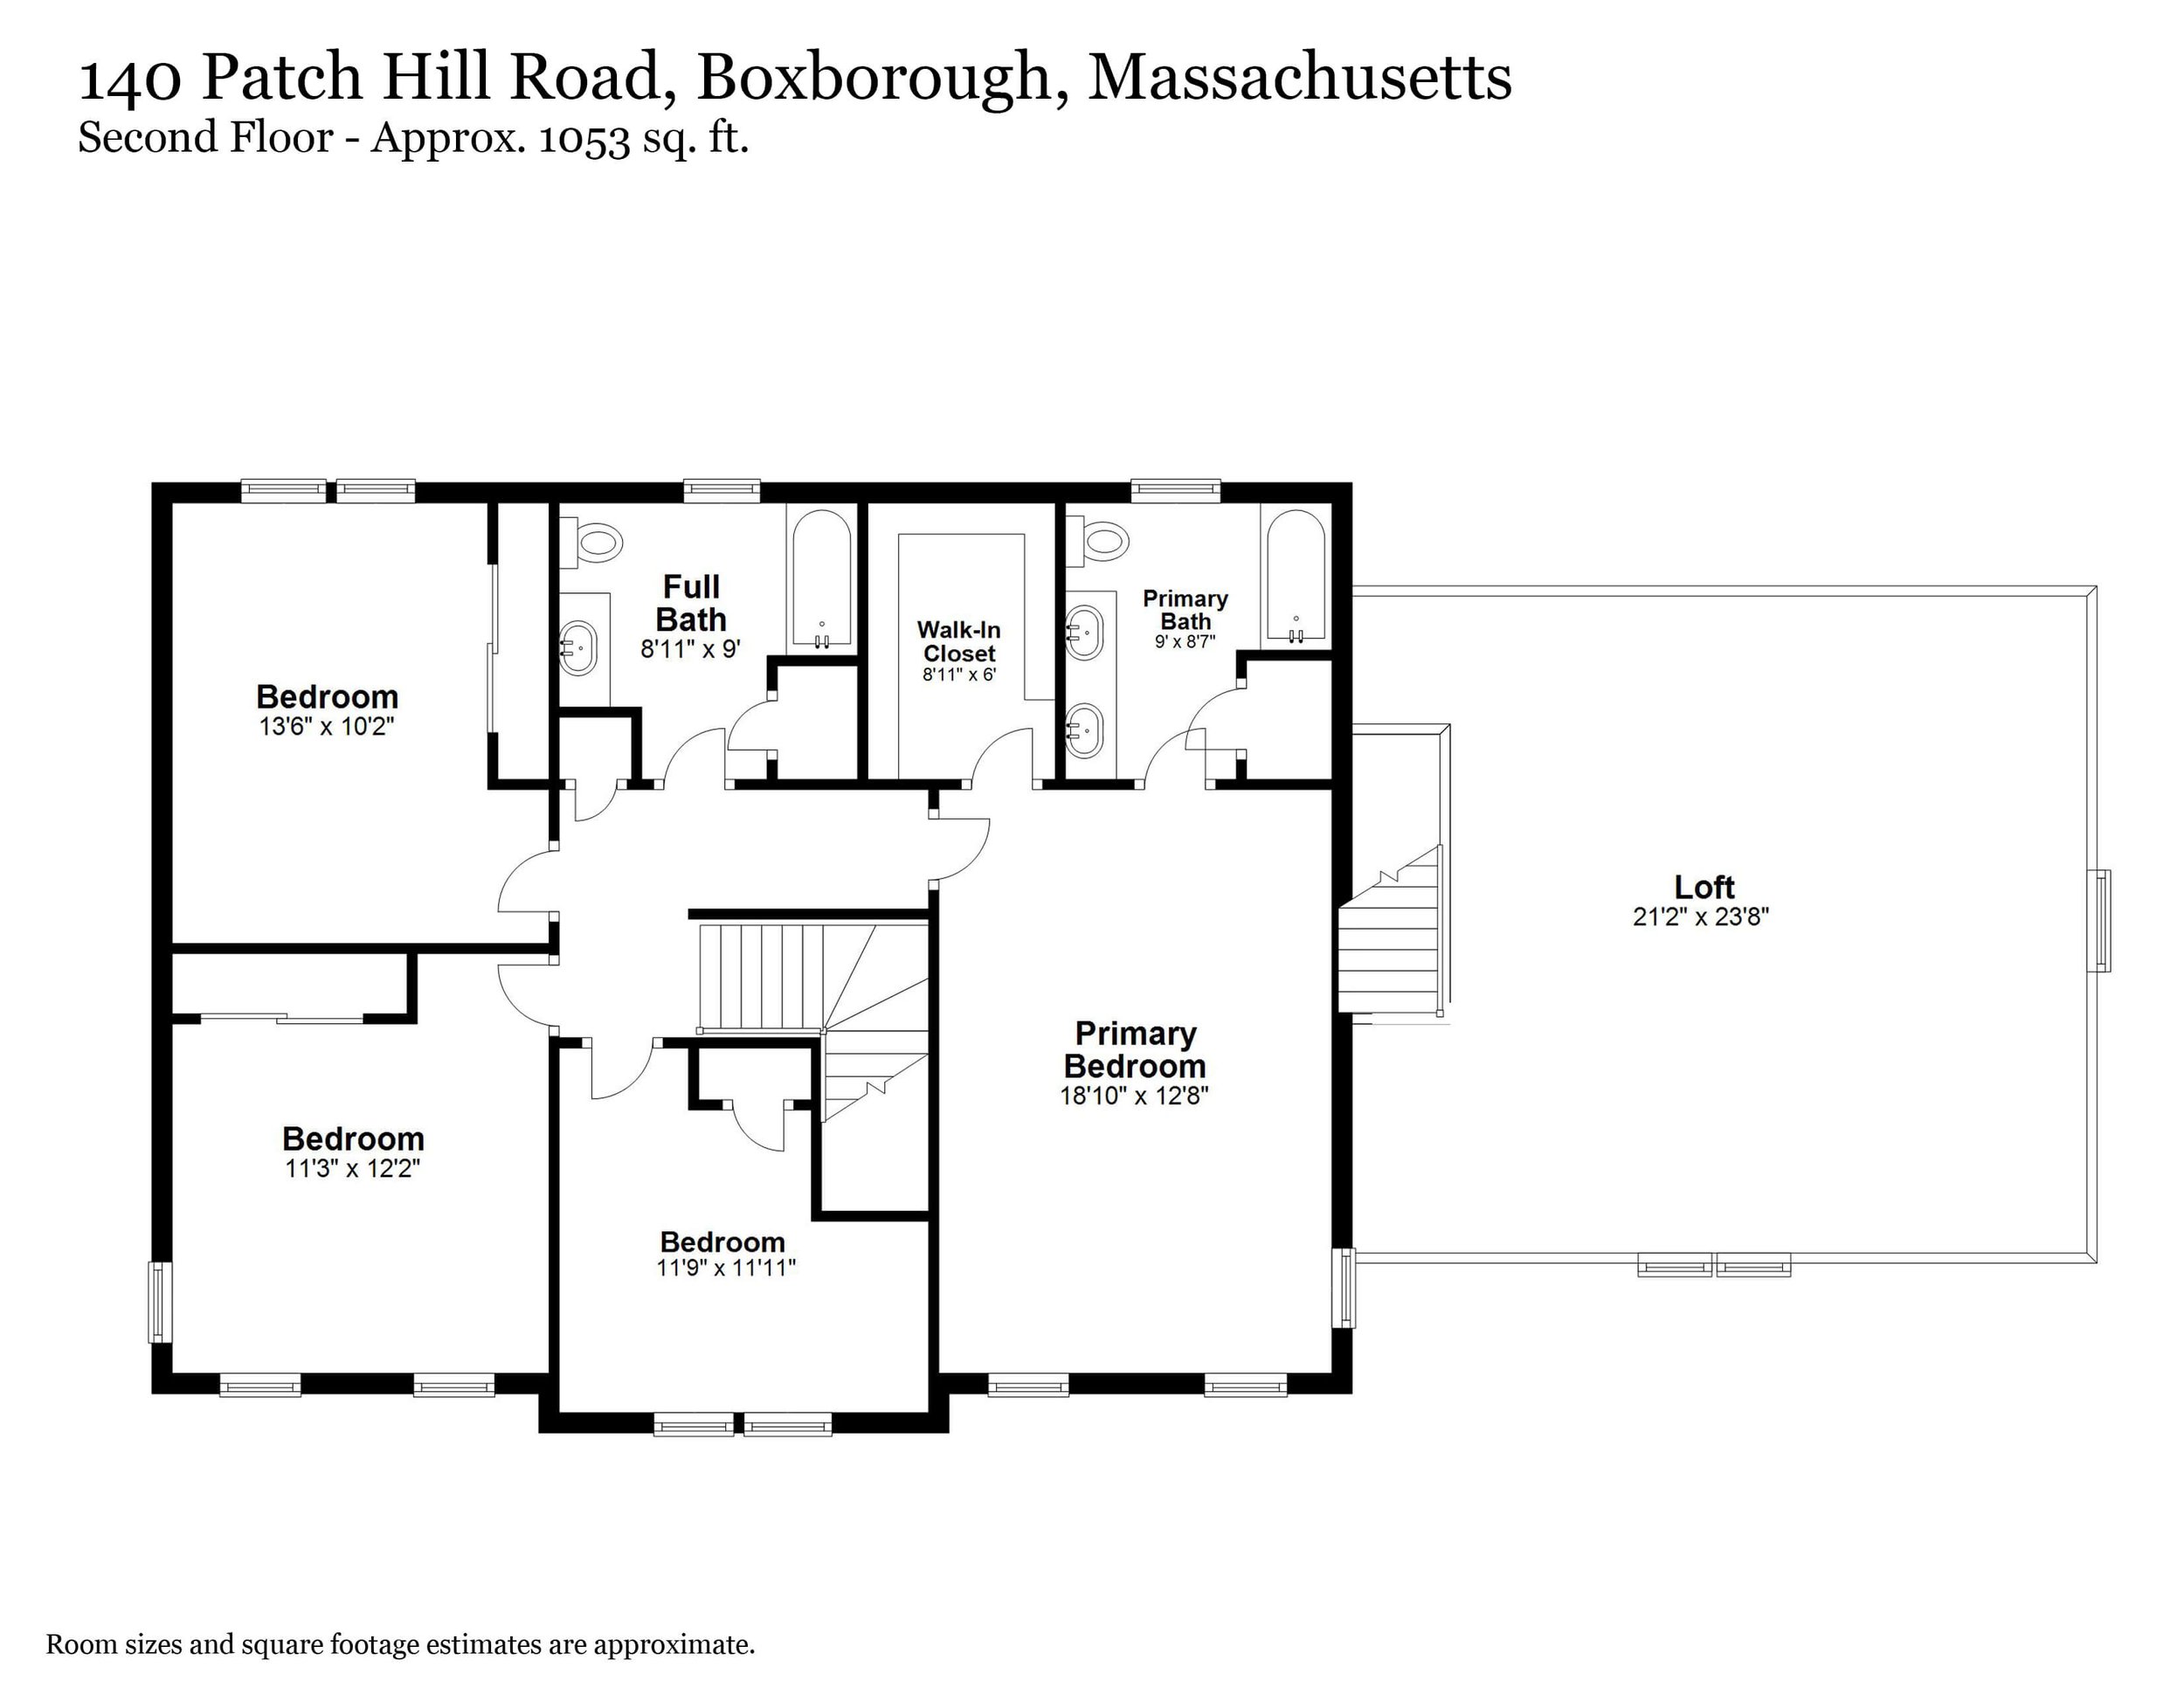 140 Patch Hill Road, Joan Bissdorf, Boxborough, MA - Floor 2-2.jpg